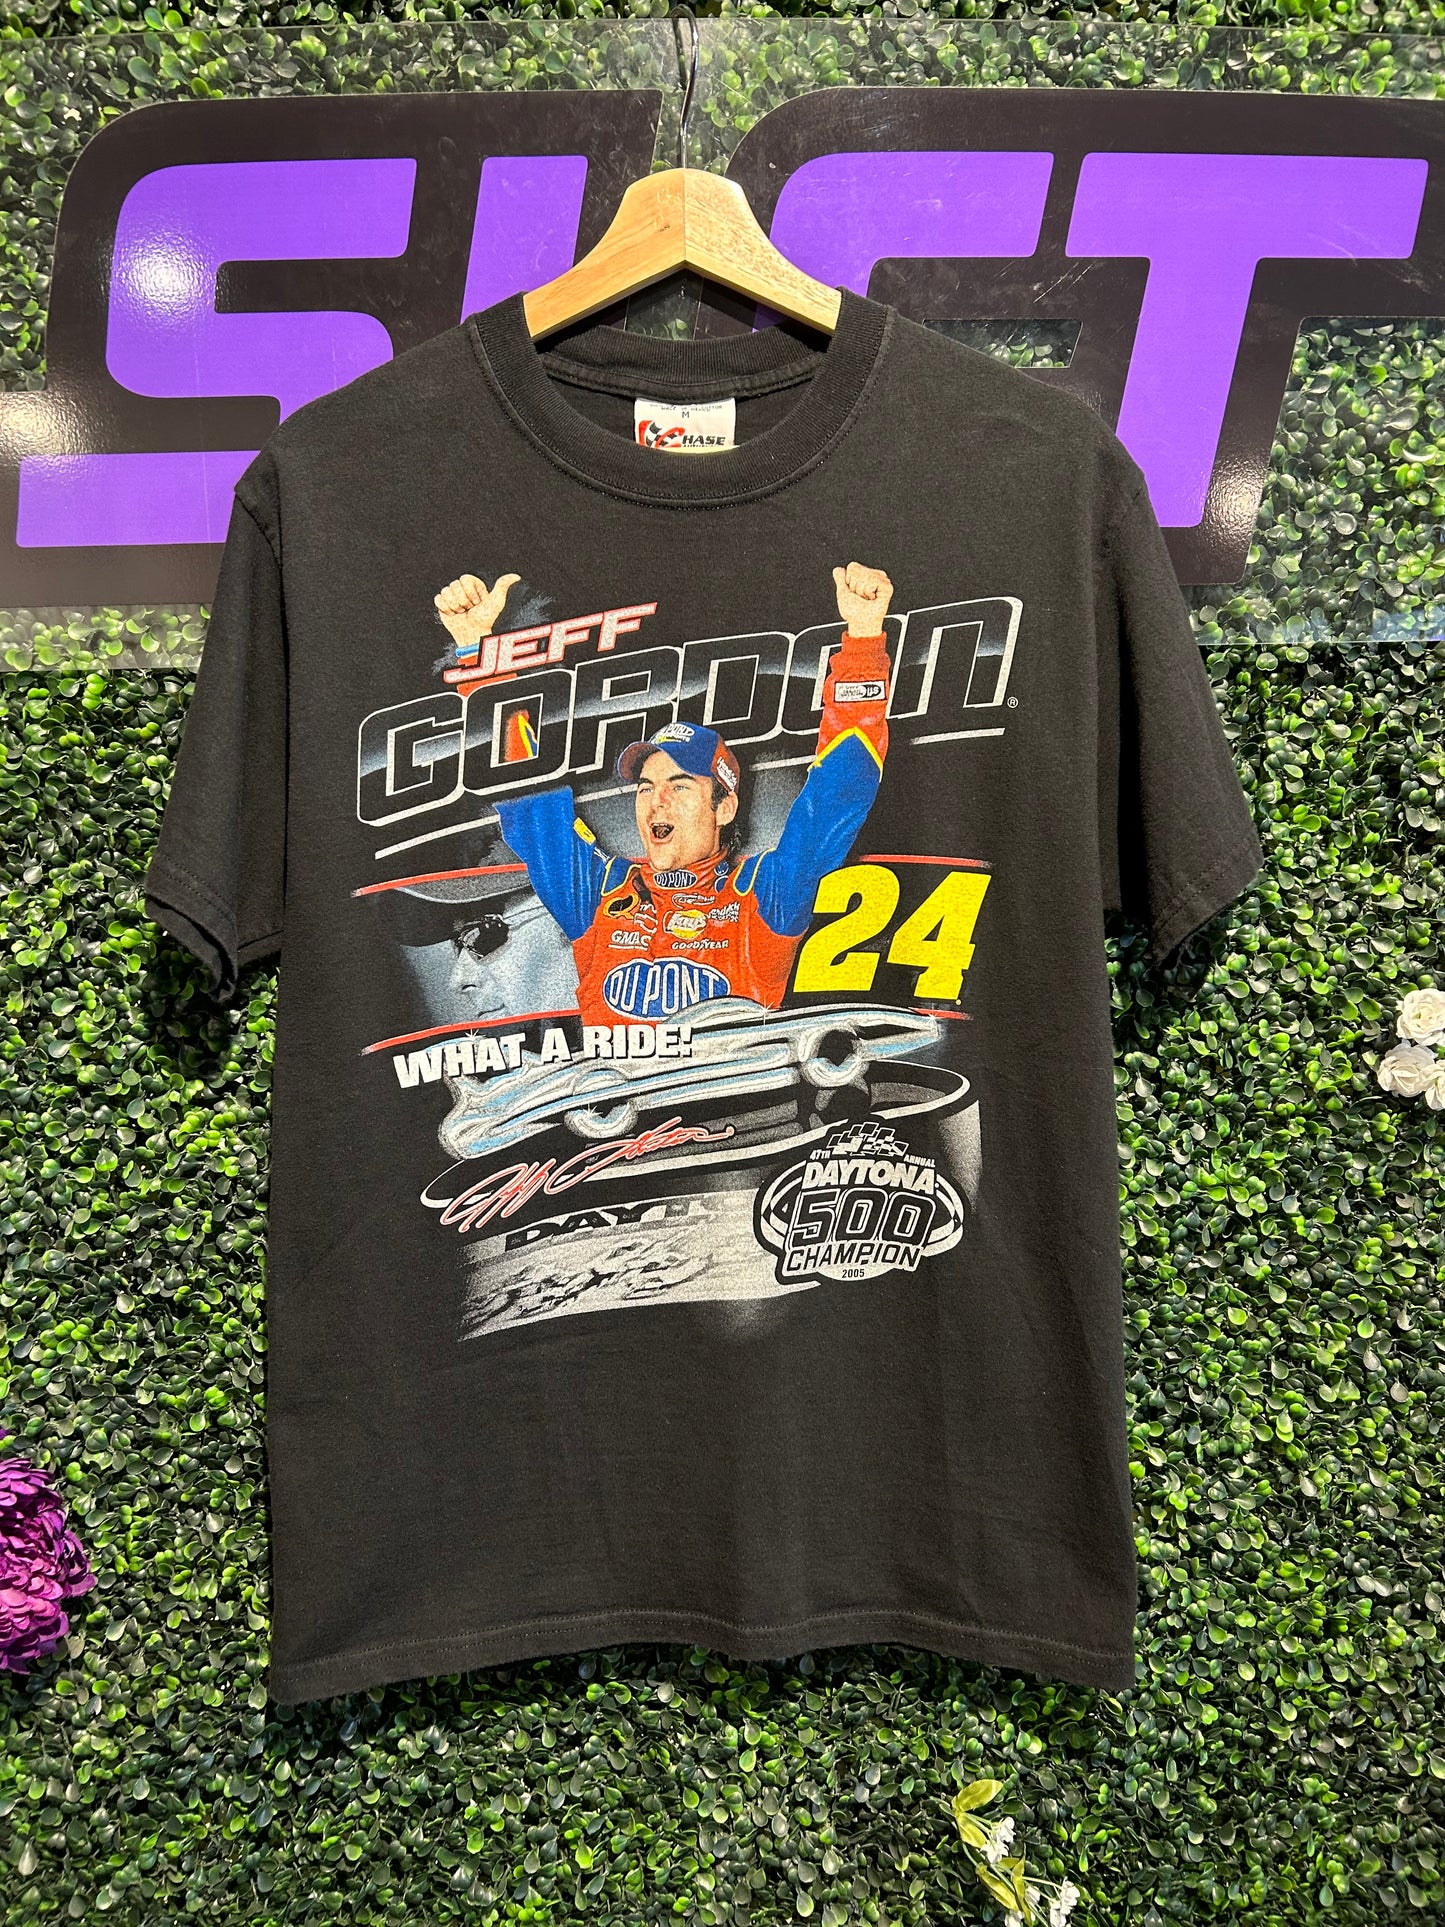 2005 Jeff Gordon Daytona 500 NASCAR T-Shirt. Size Medium